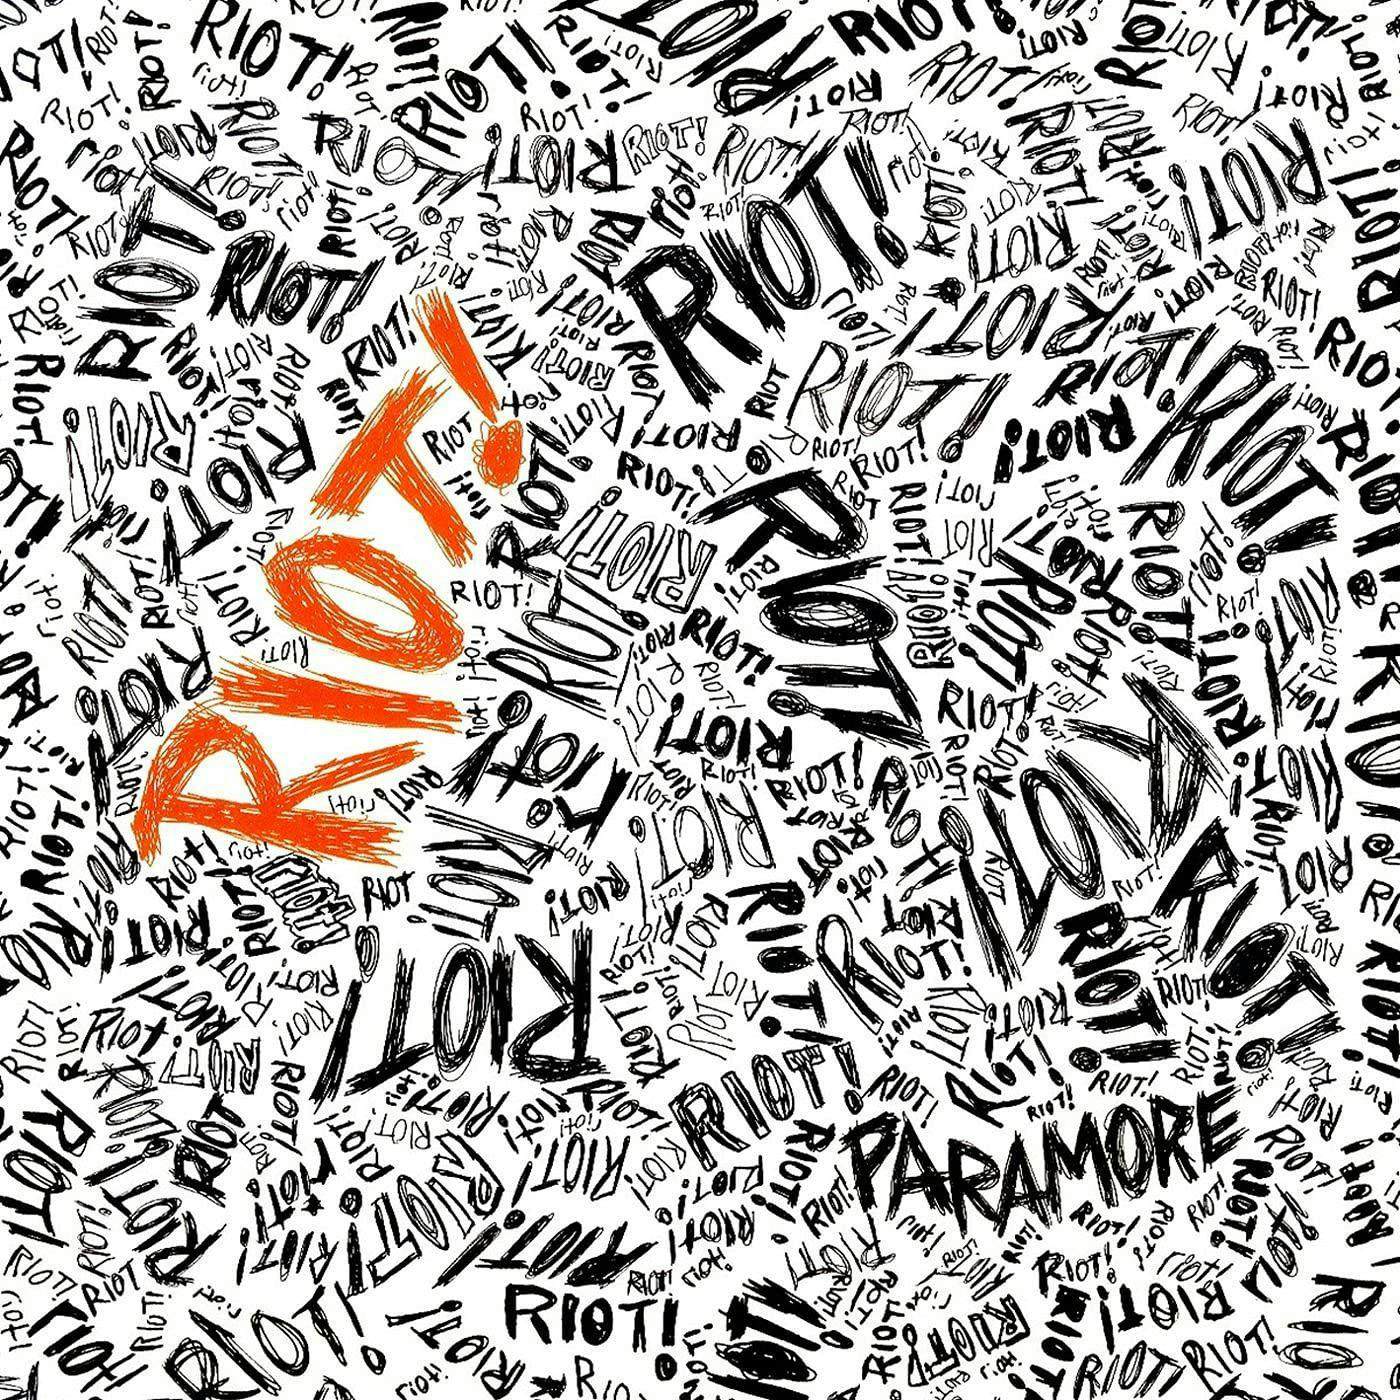 Paramore - Riot! (12") LP Vinyl Record